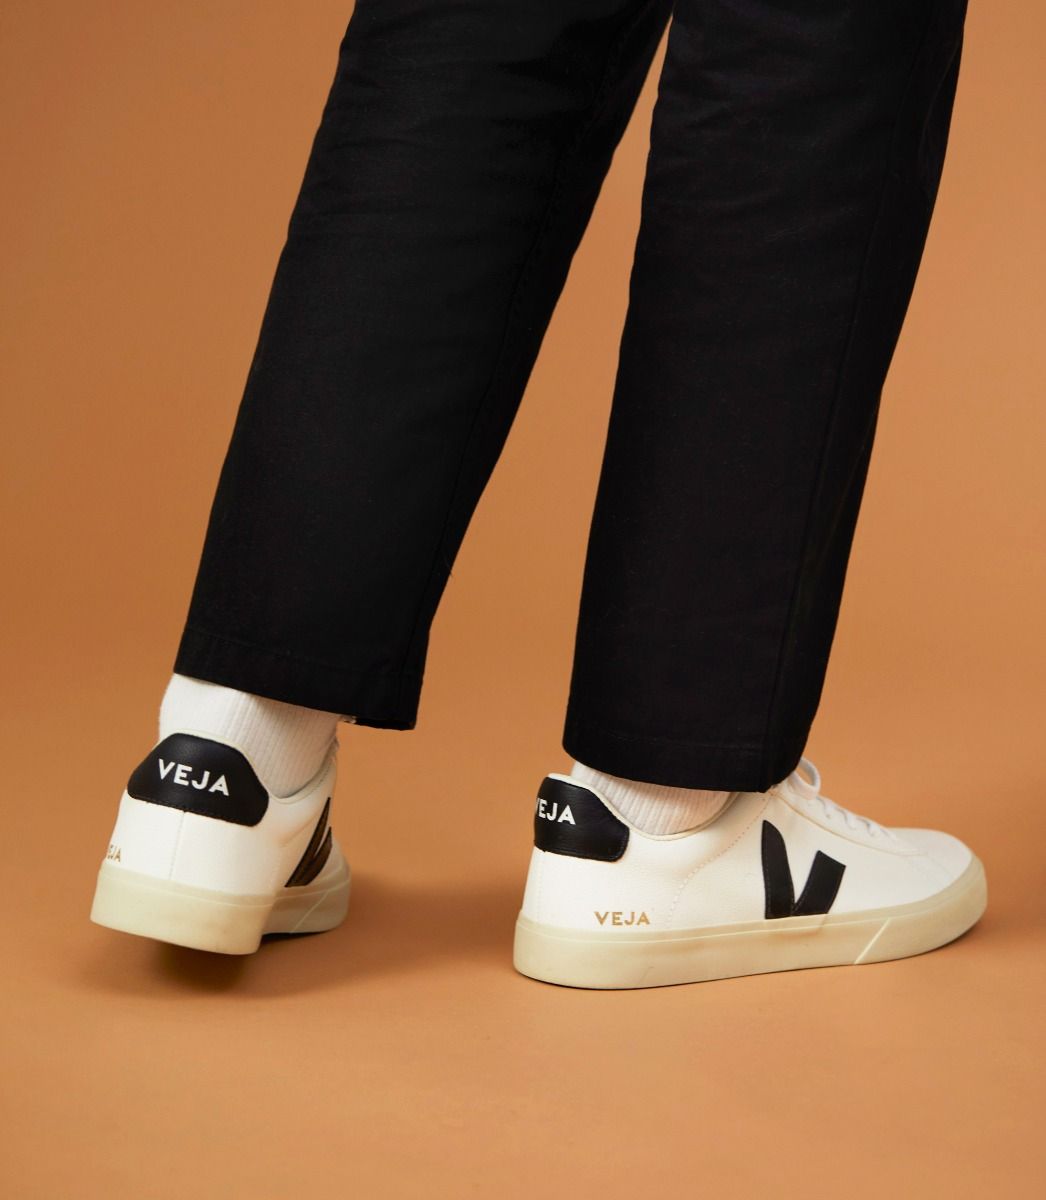 Veja Mens Campo ChromeFree Leather Sneakers - White/Black